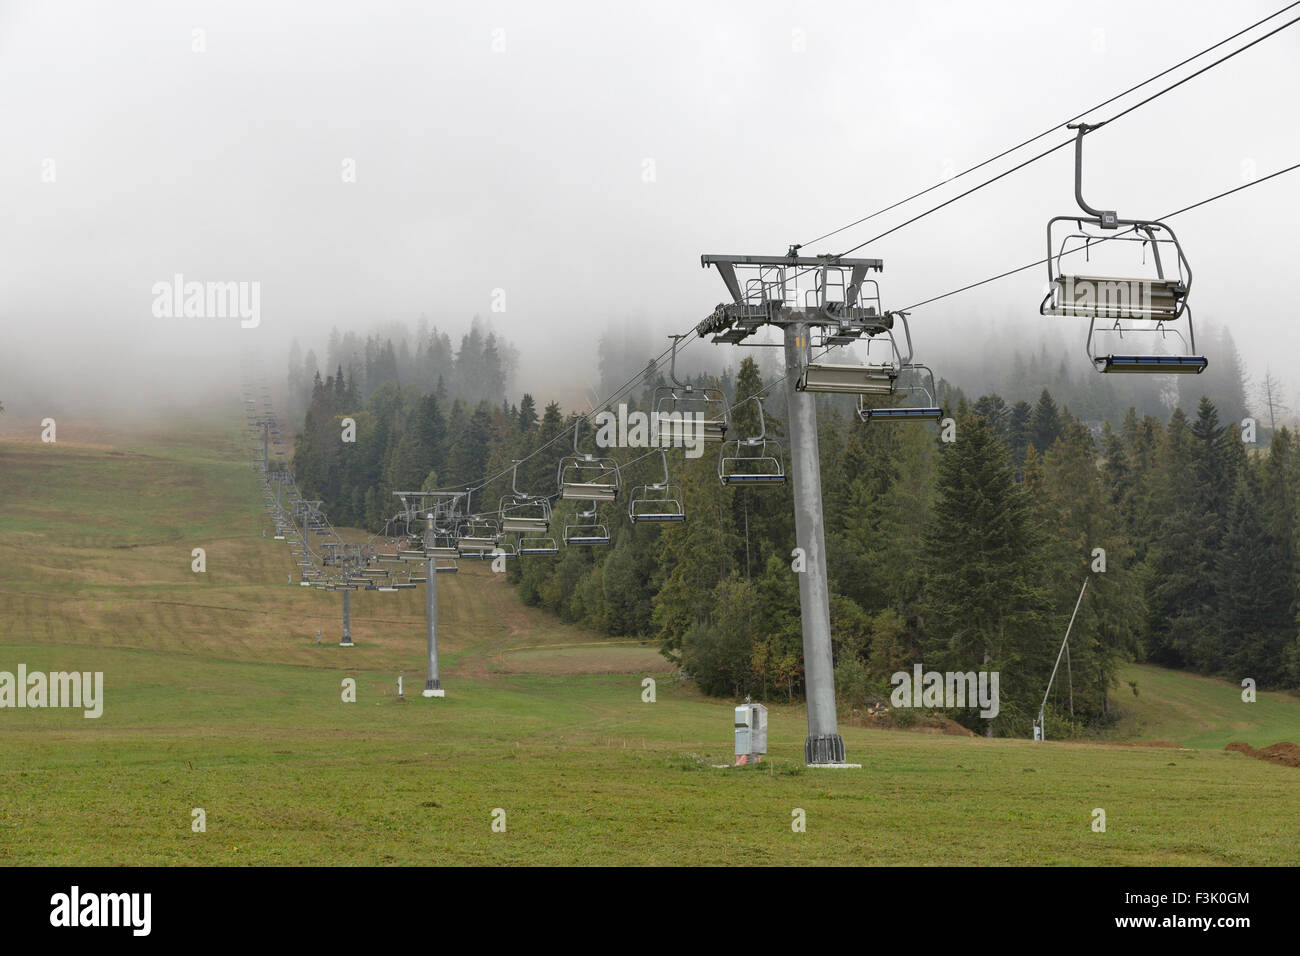 skiing lift mechanism in the fall preparing for winter season Stock Photo